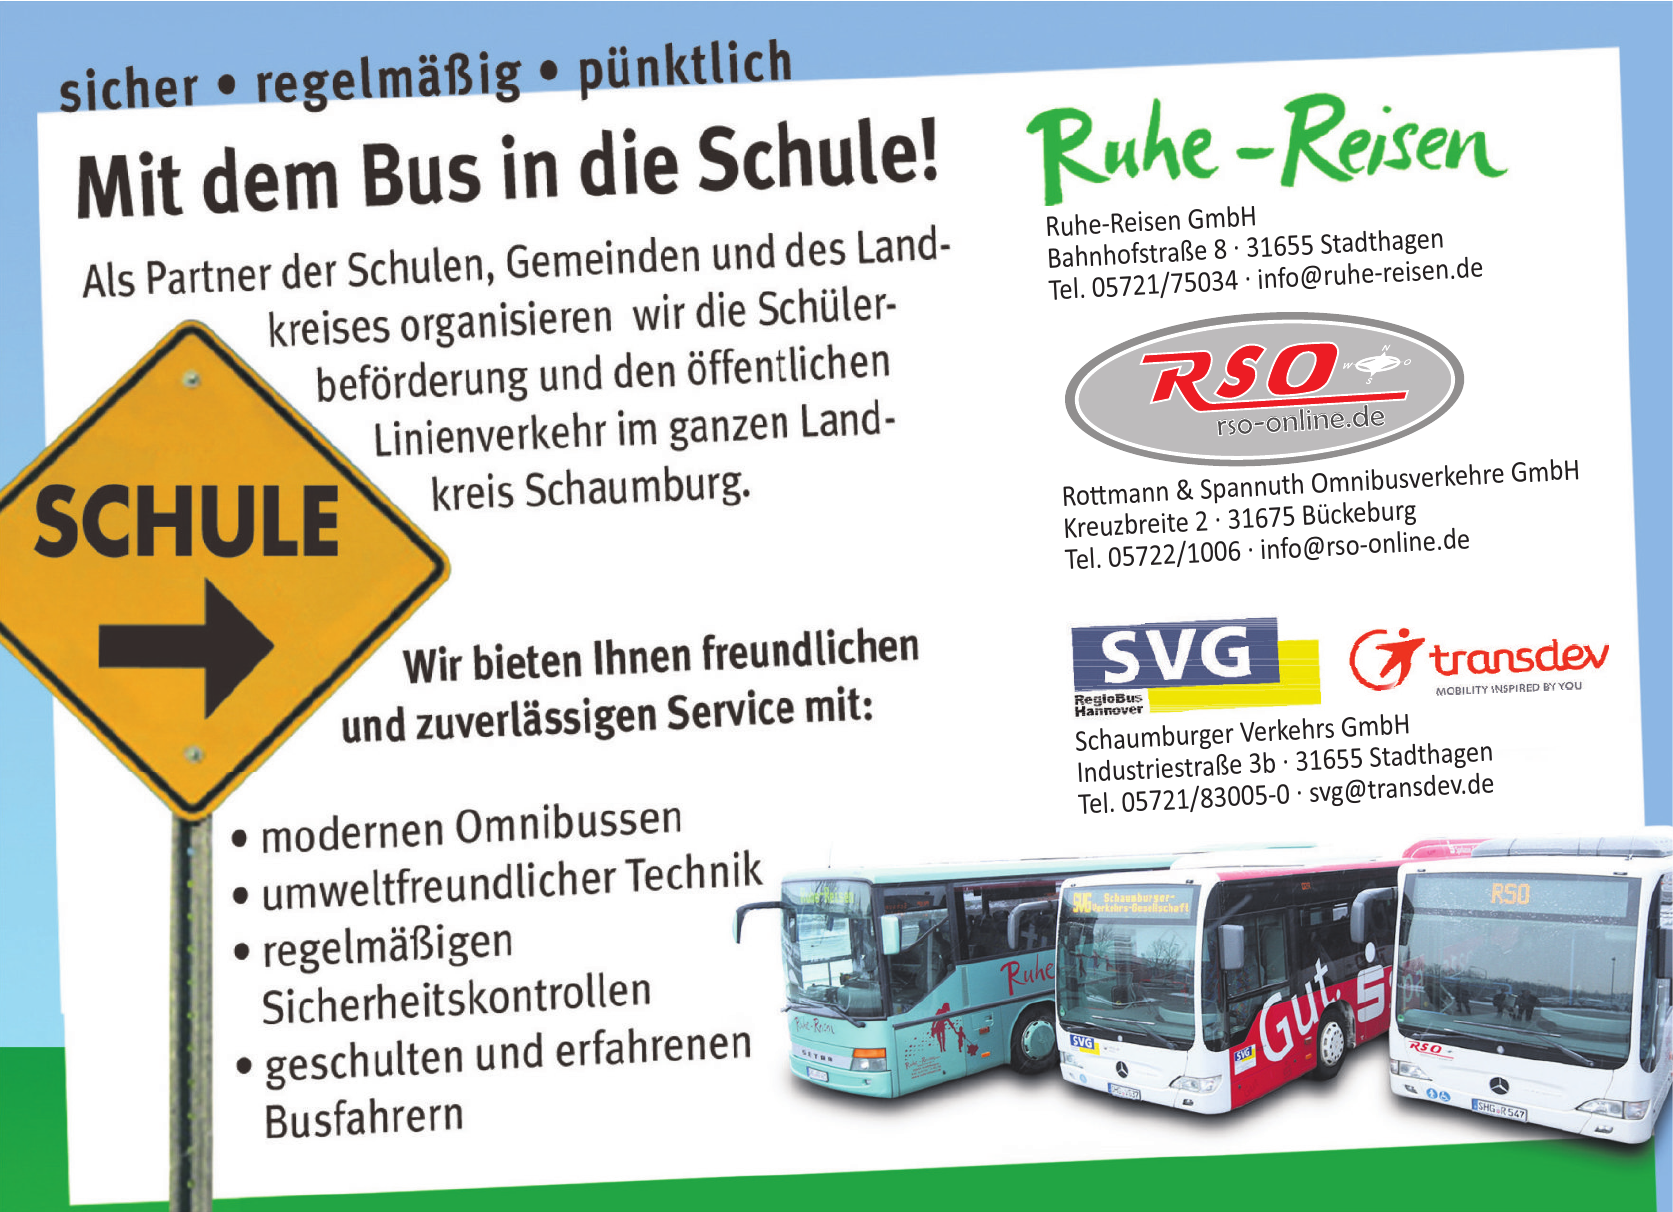 Ruhe-Reisen GmbH